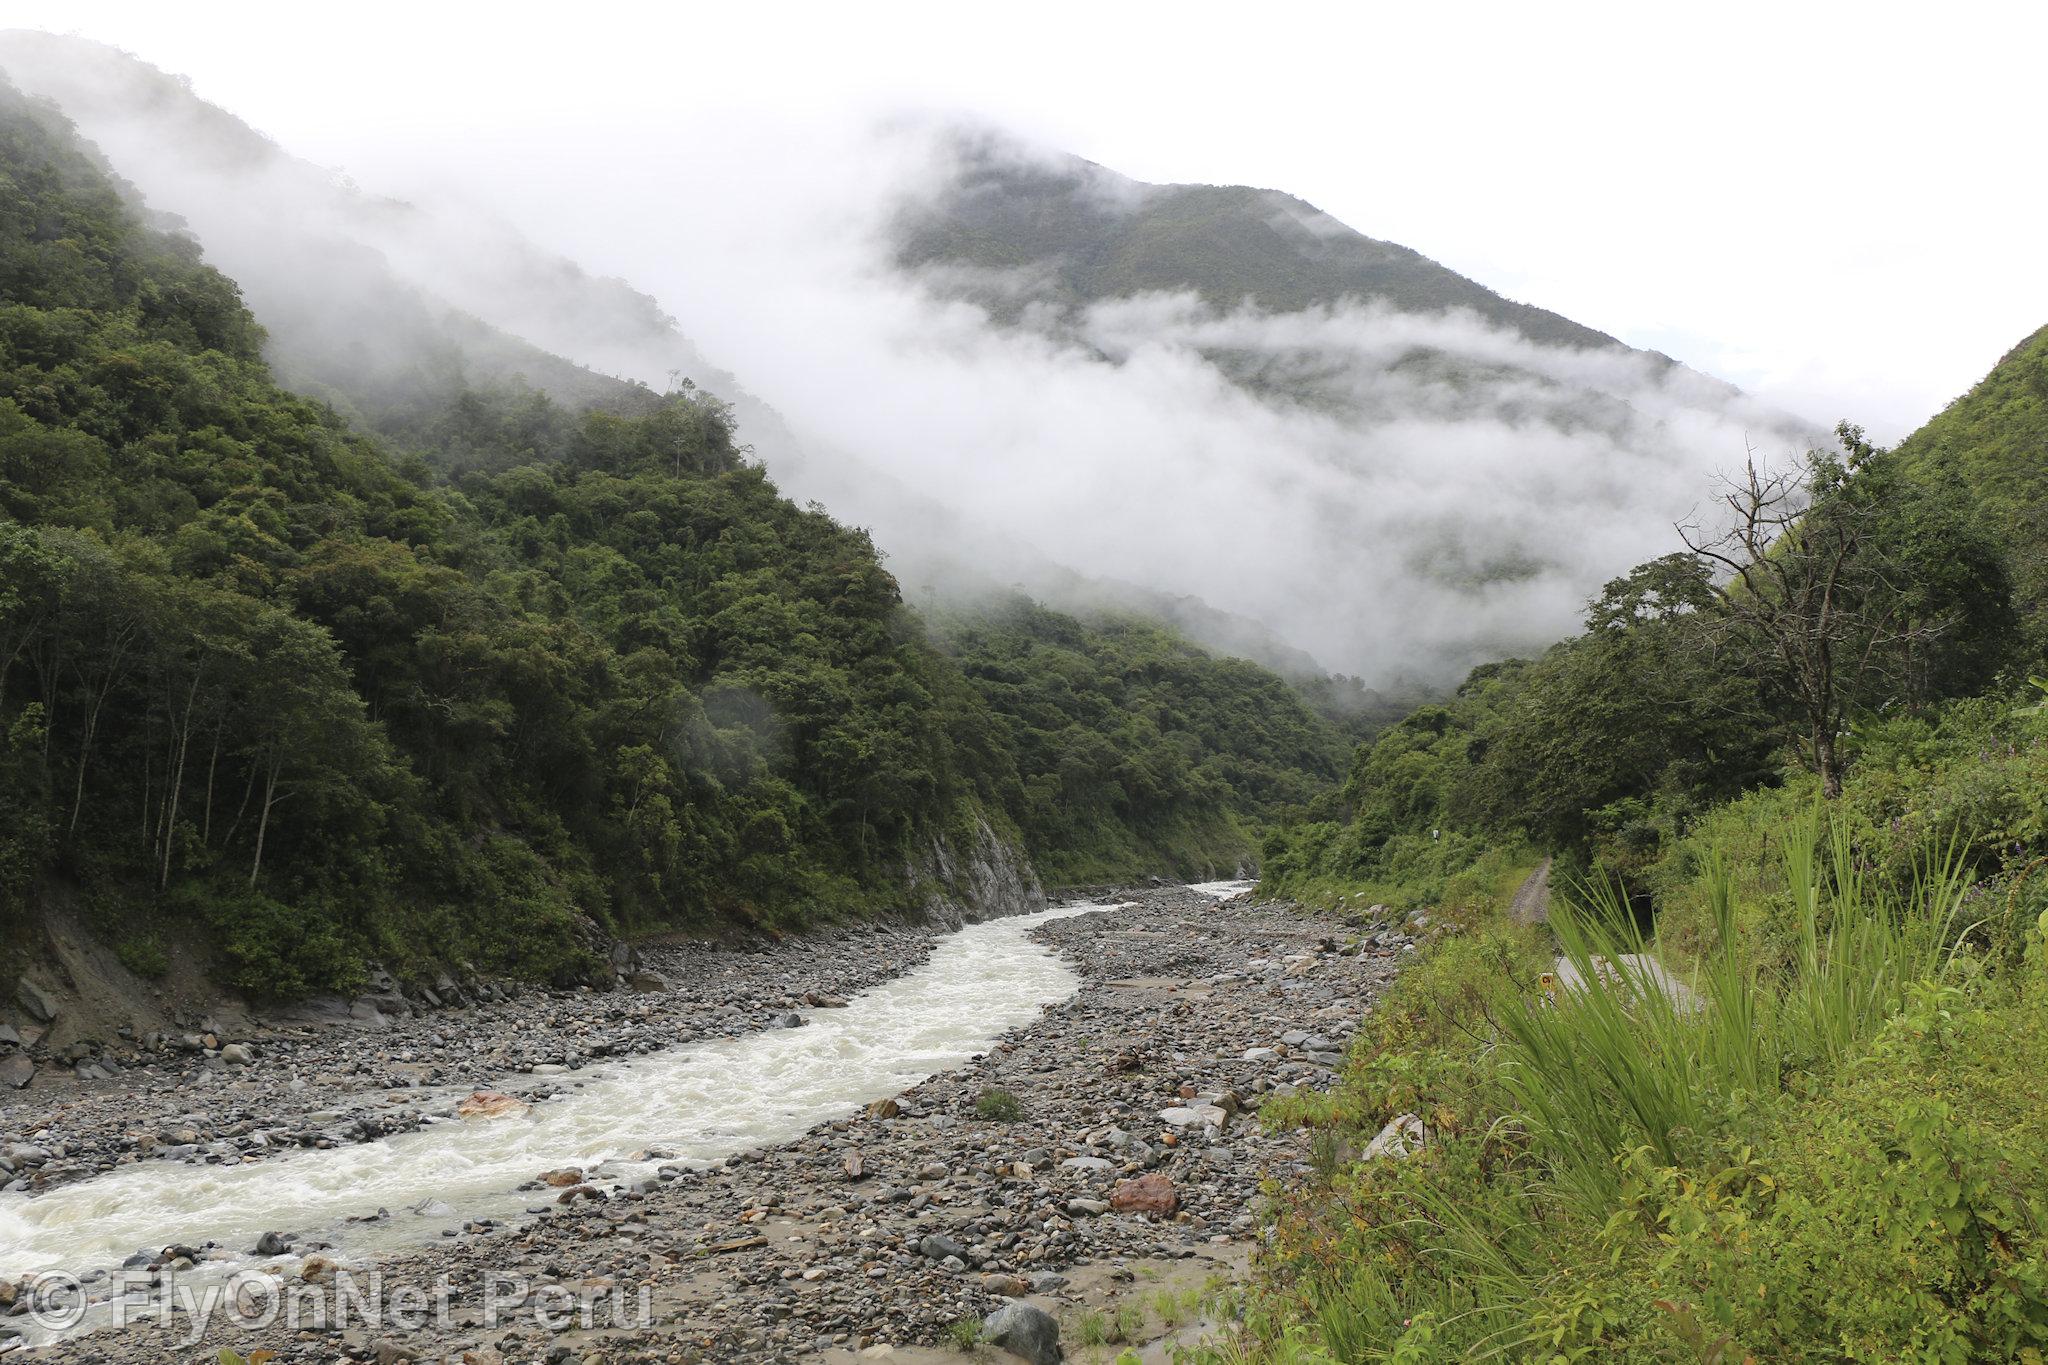 Photo Album: Salcantay River